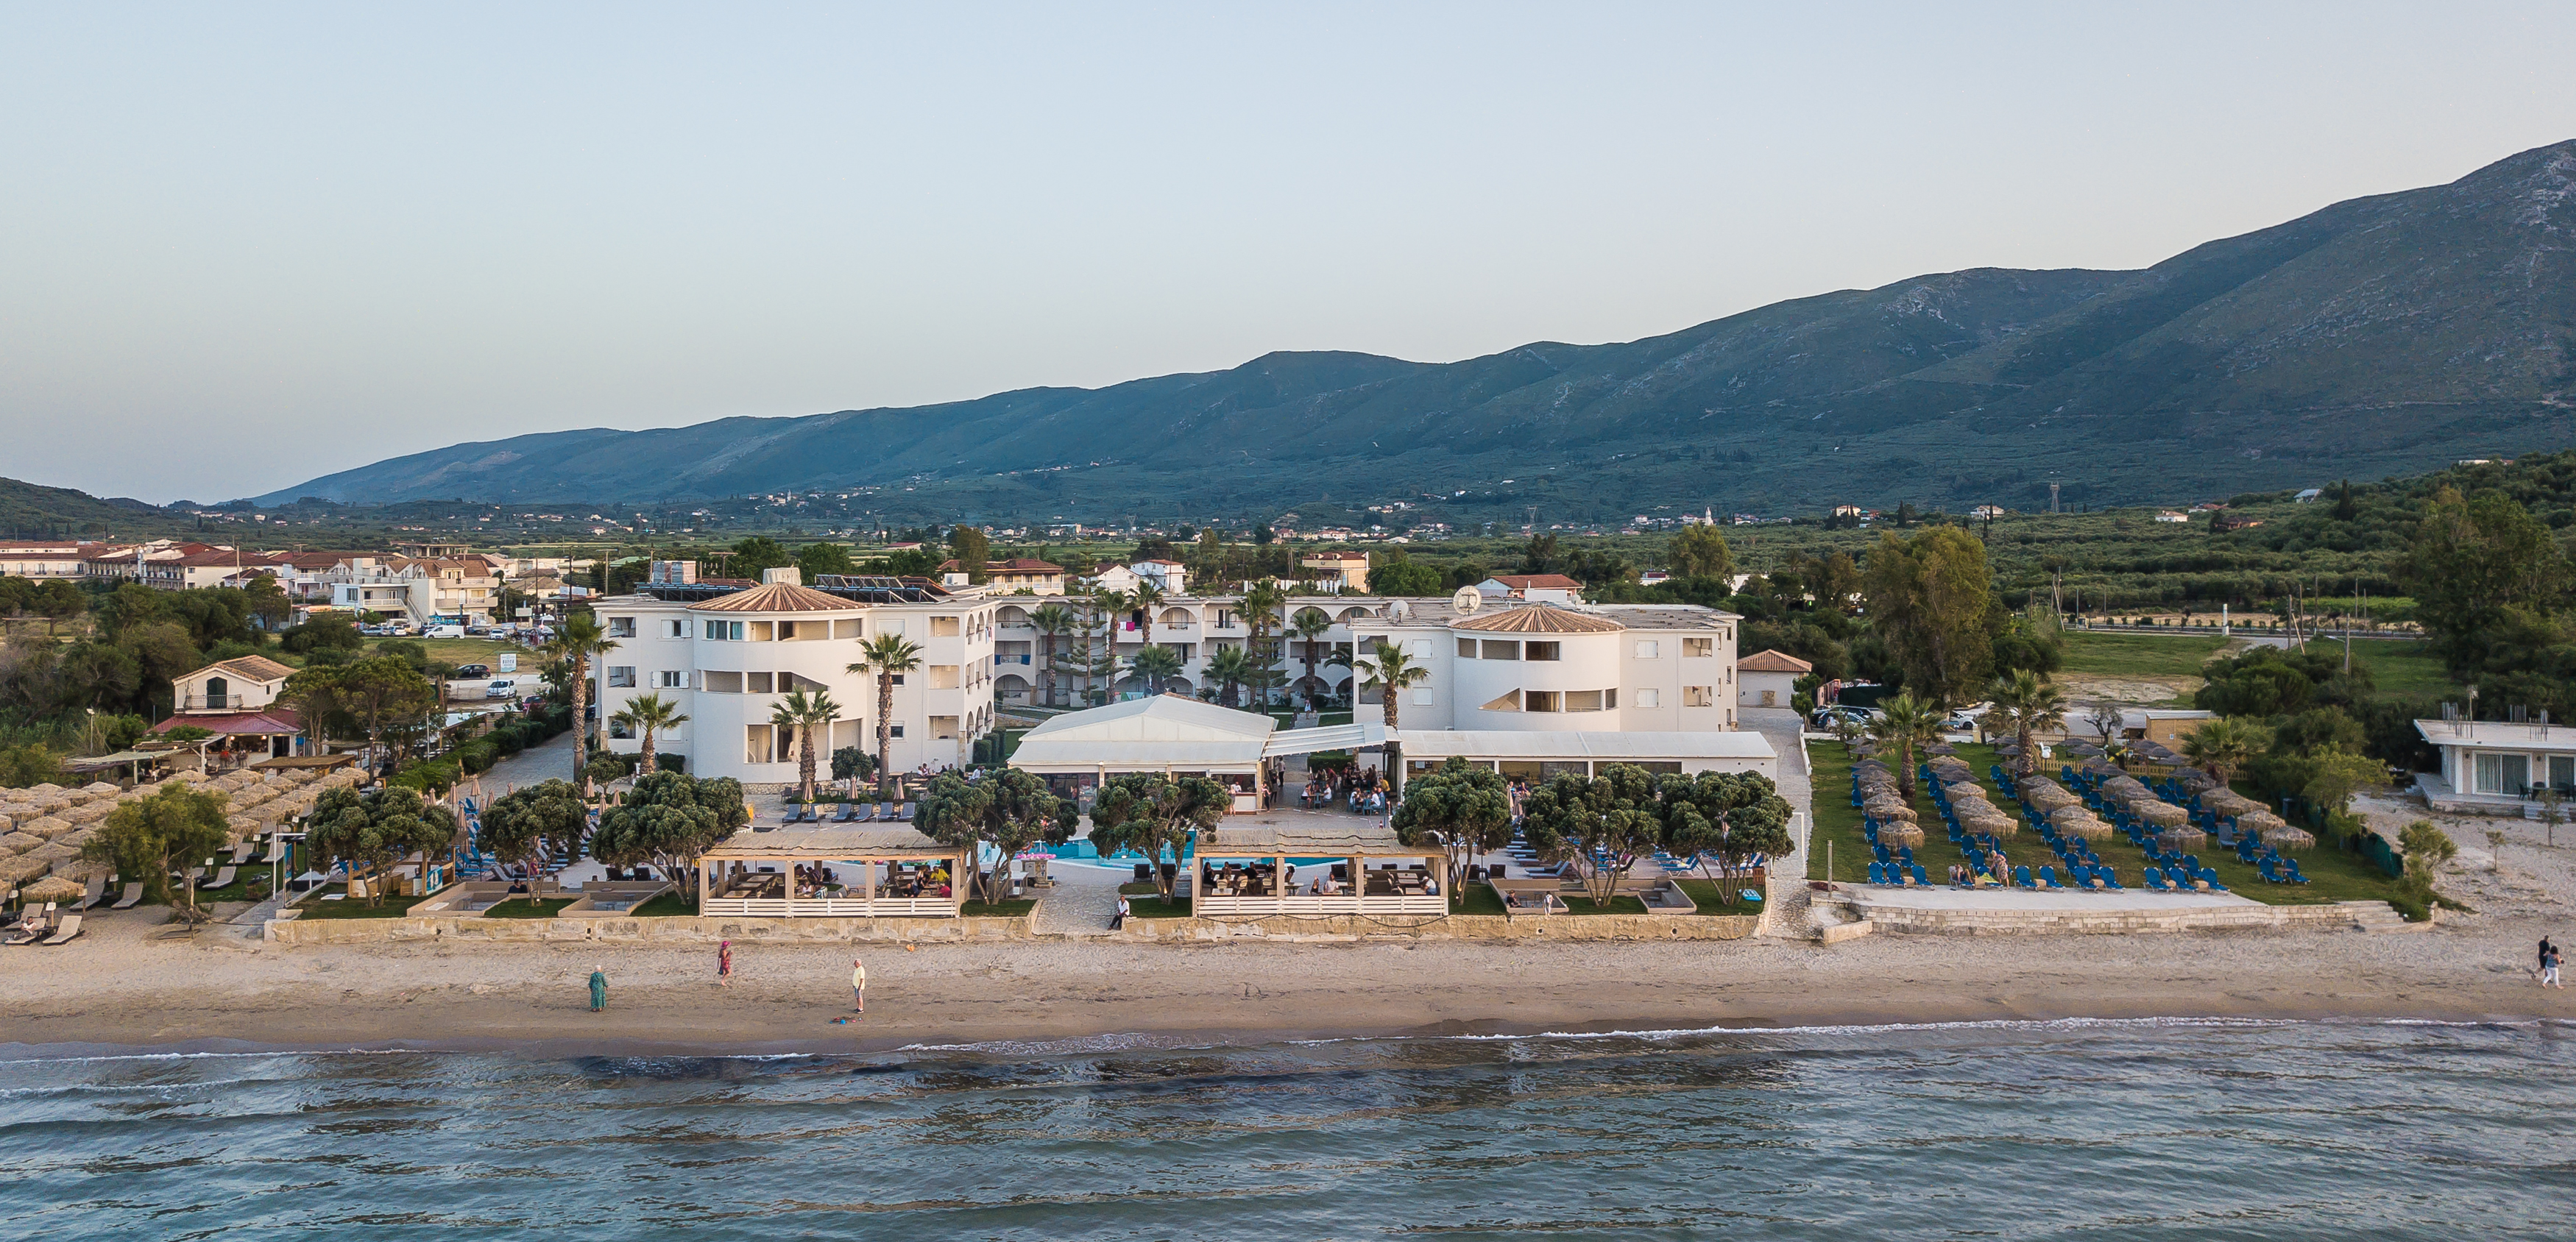 Alykanas Beach Grand Hotel- Ζάκυνθος ✦ -45% ✦ 3 Ημέρες (2 Διανυκτερεύσεις) ✦ 2 άτομα + 1 παιδί έως 12 ετών ✦ 12 ✦ 01/06/2023 έως 27/06/2023 και 01/09/2023 έως 28/09/2023 ✦ Μπροστά στην Παραλία!